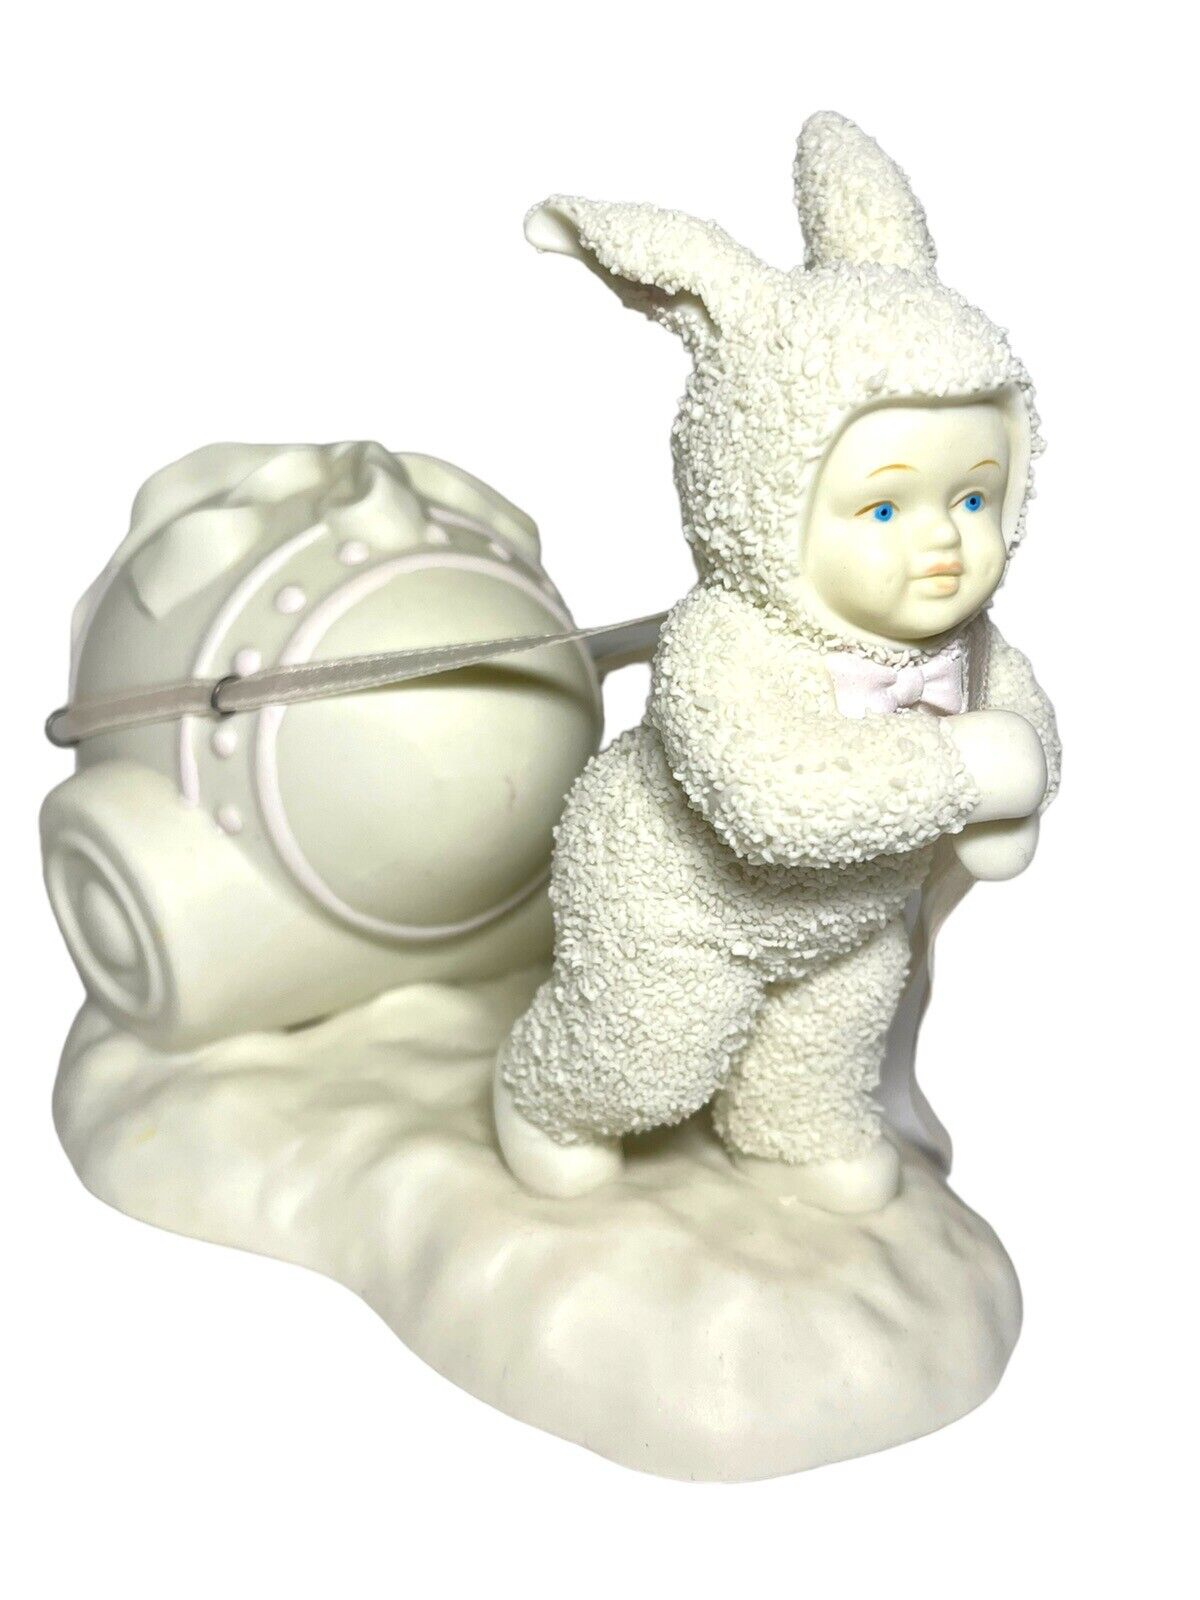 1994 Dept. 56 Snowbunnies Springtime Stories  Easter Egg “Special Delivery” Rare